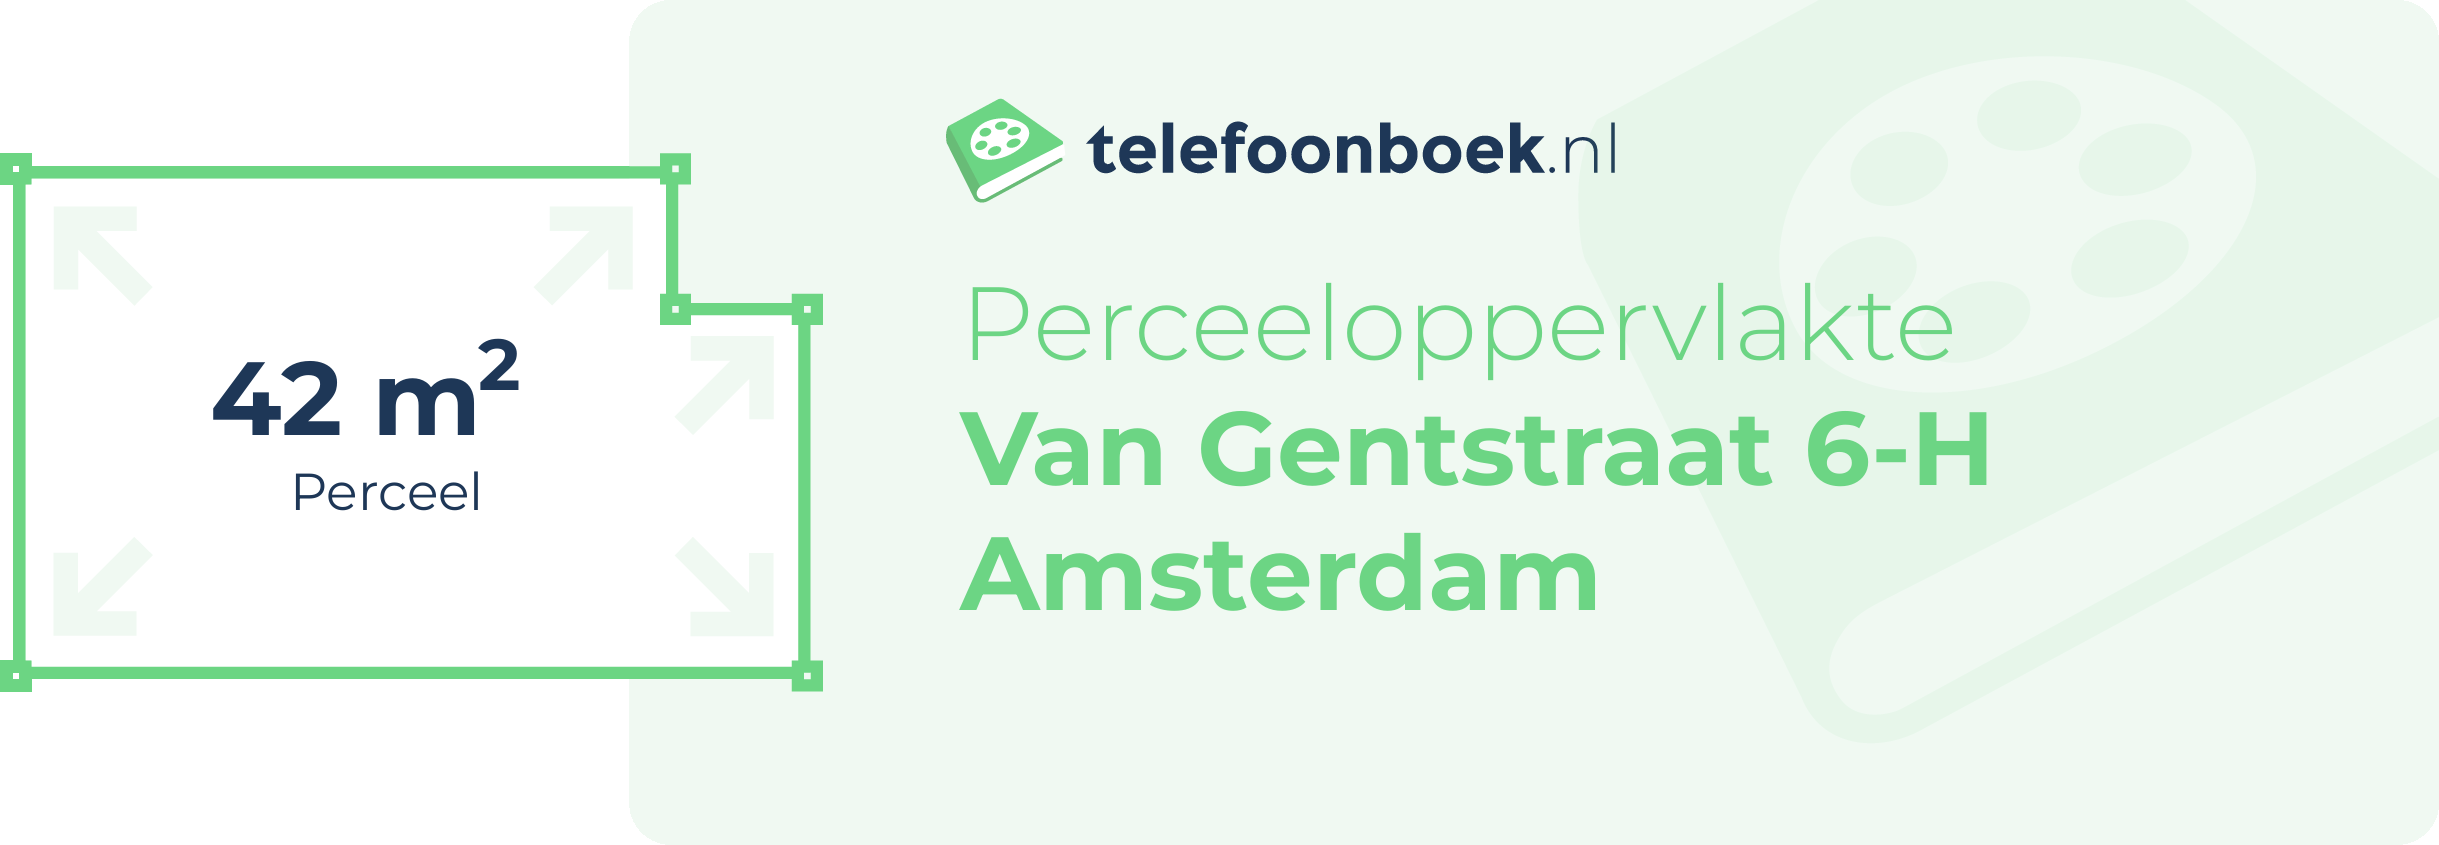 Perceeloppervlakte Van Gentstraat 6-H Amsterdam